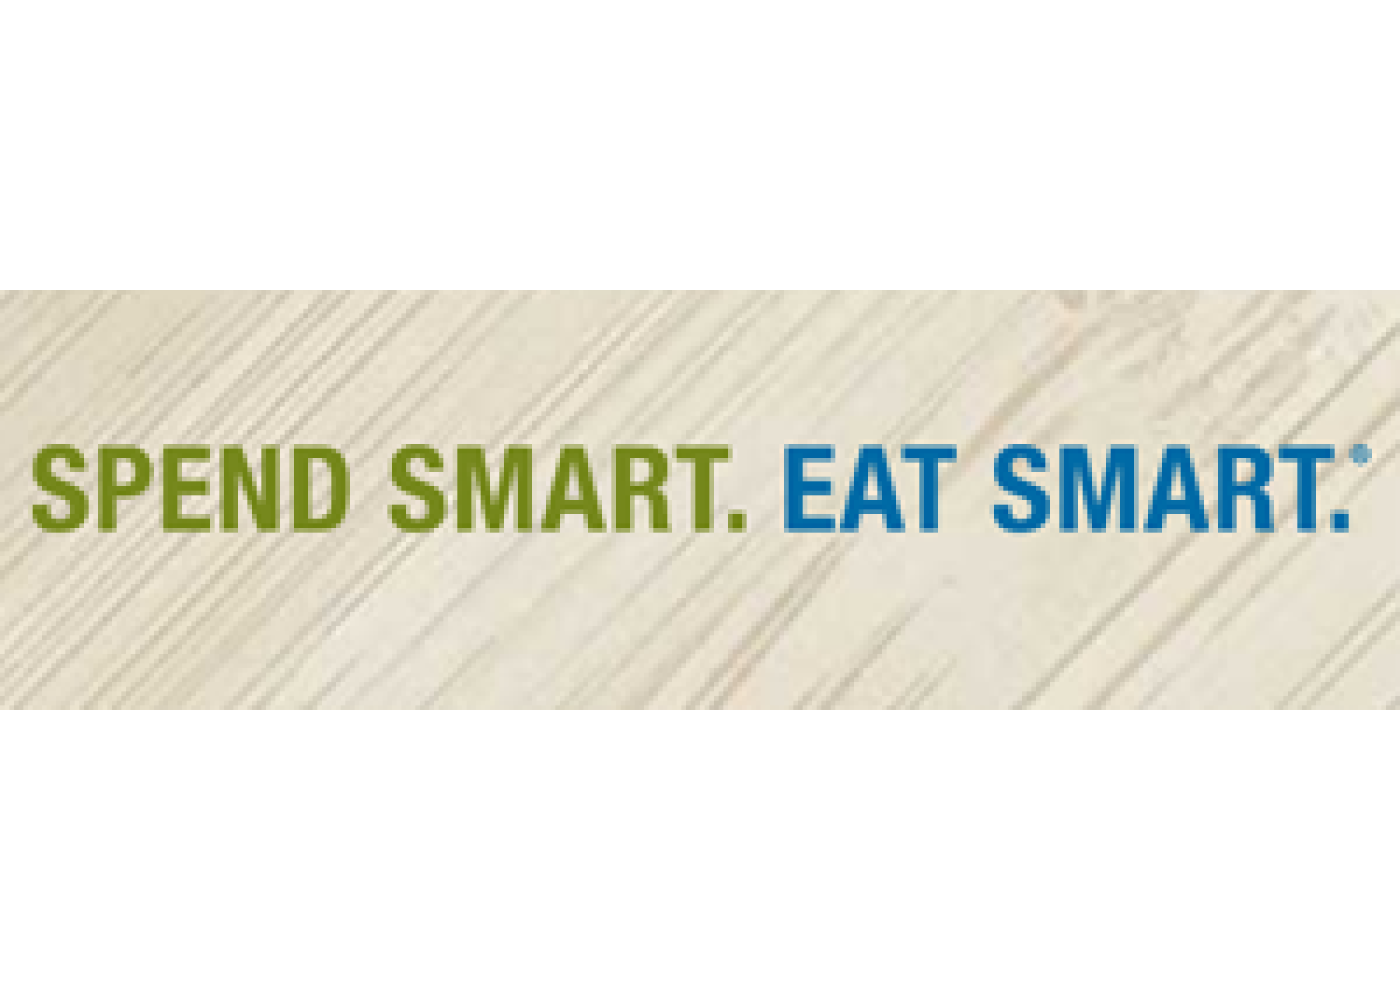 Spend Smart. Eat Smart.